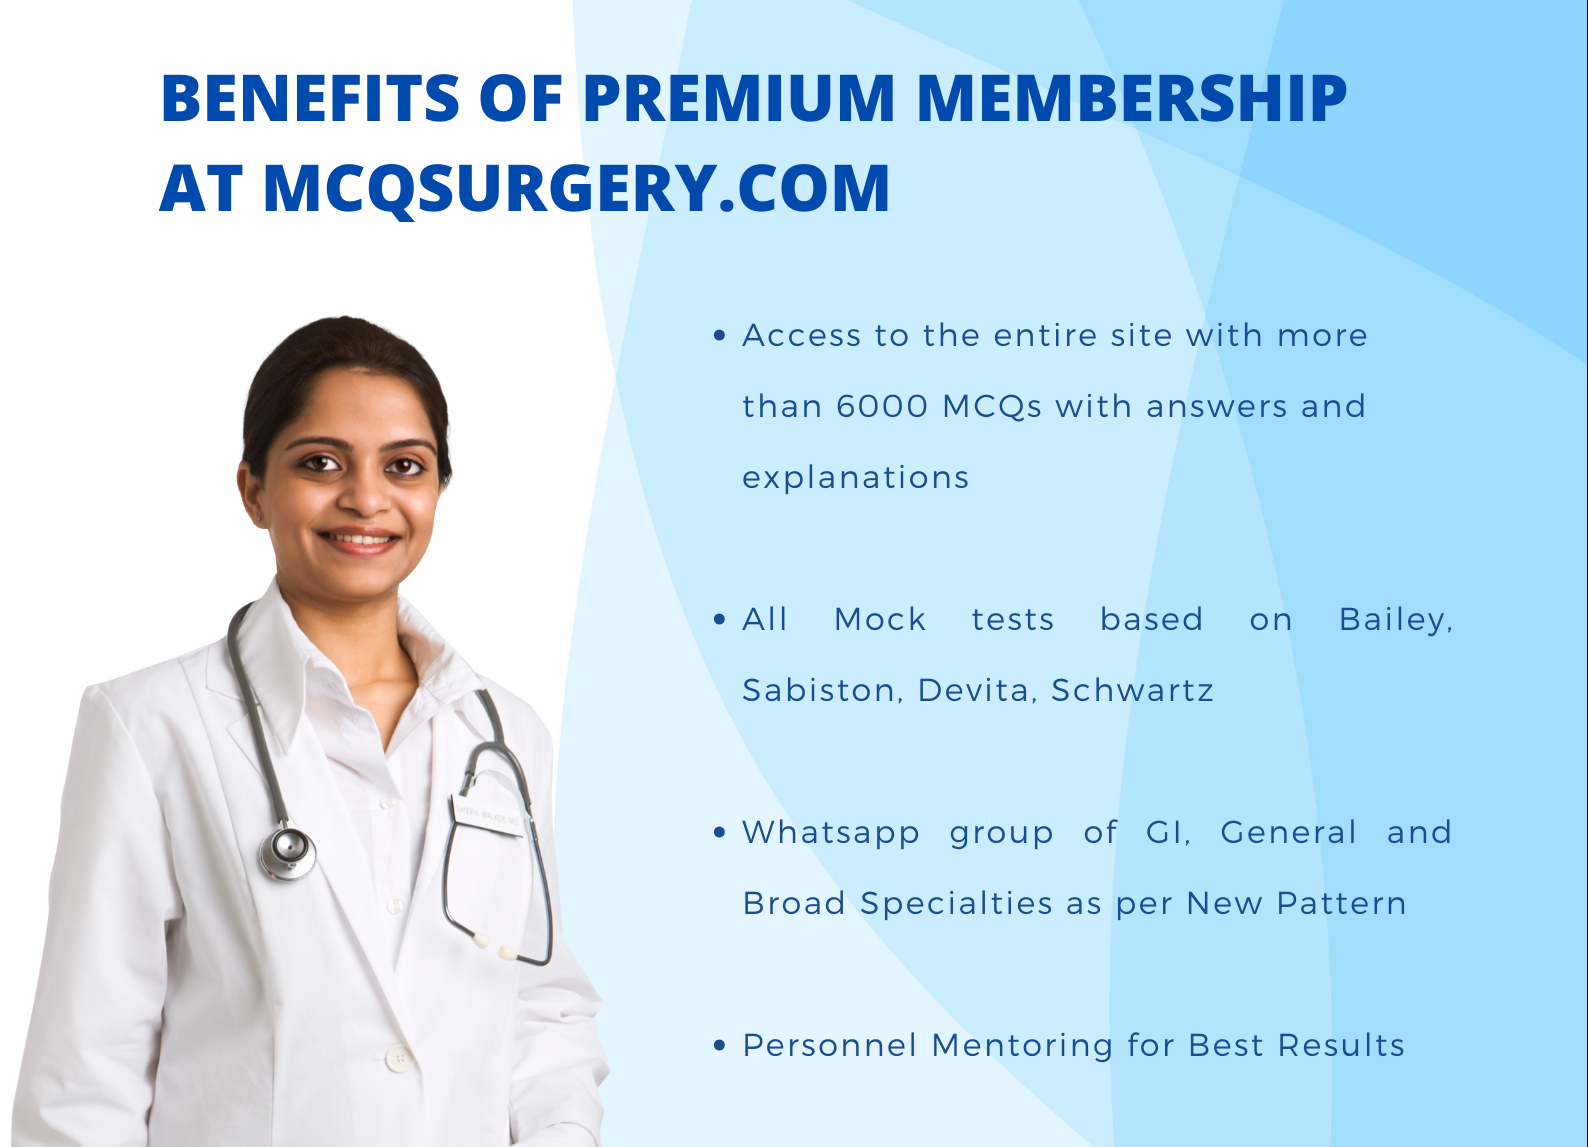 Premium Membership Advantages at mcqsurgery.com